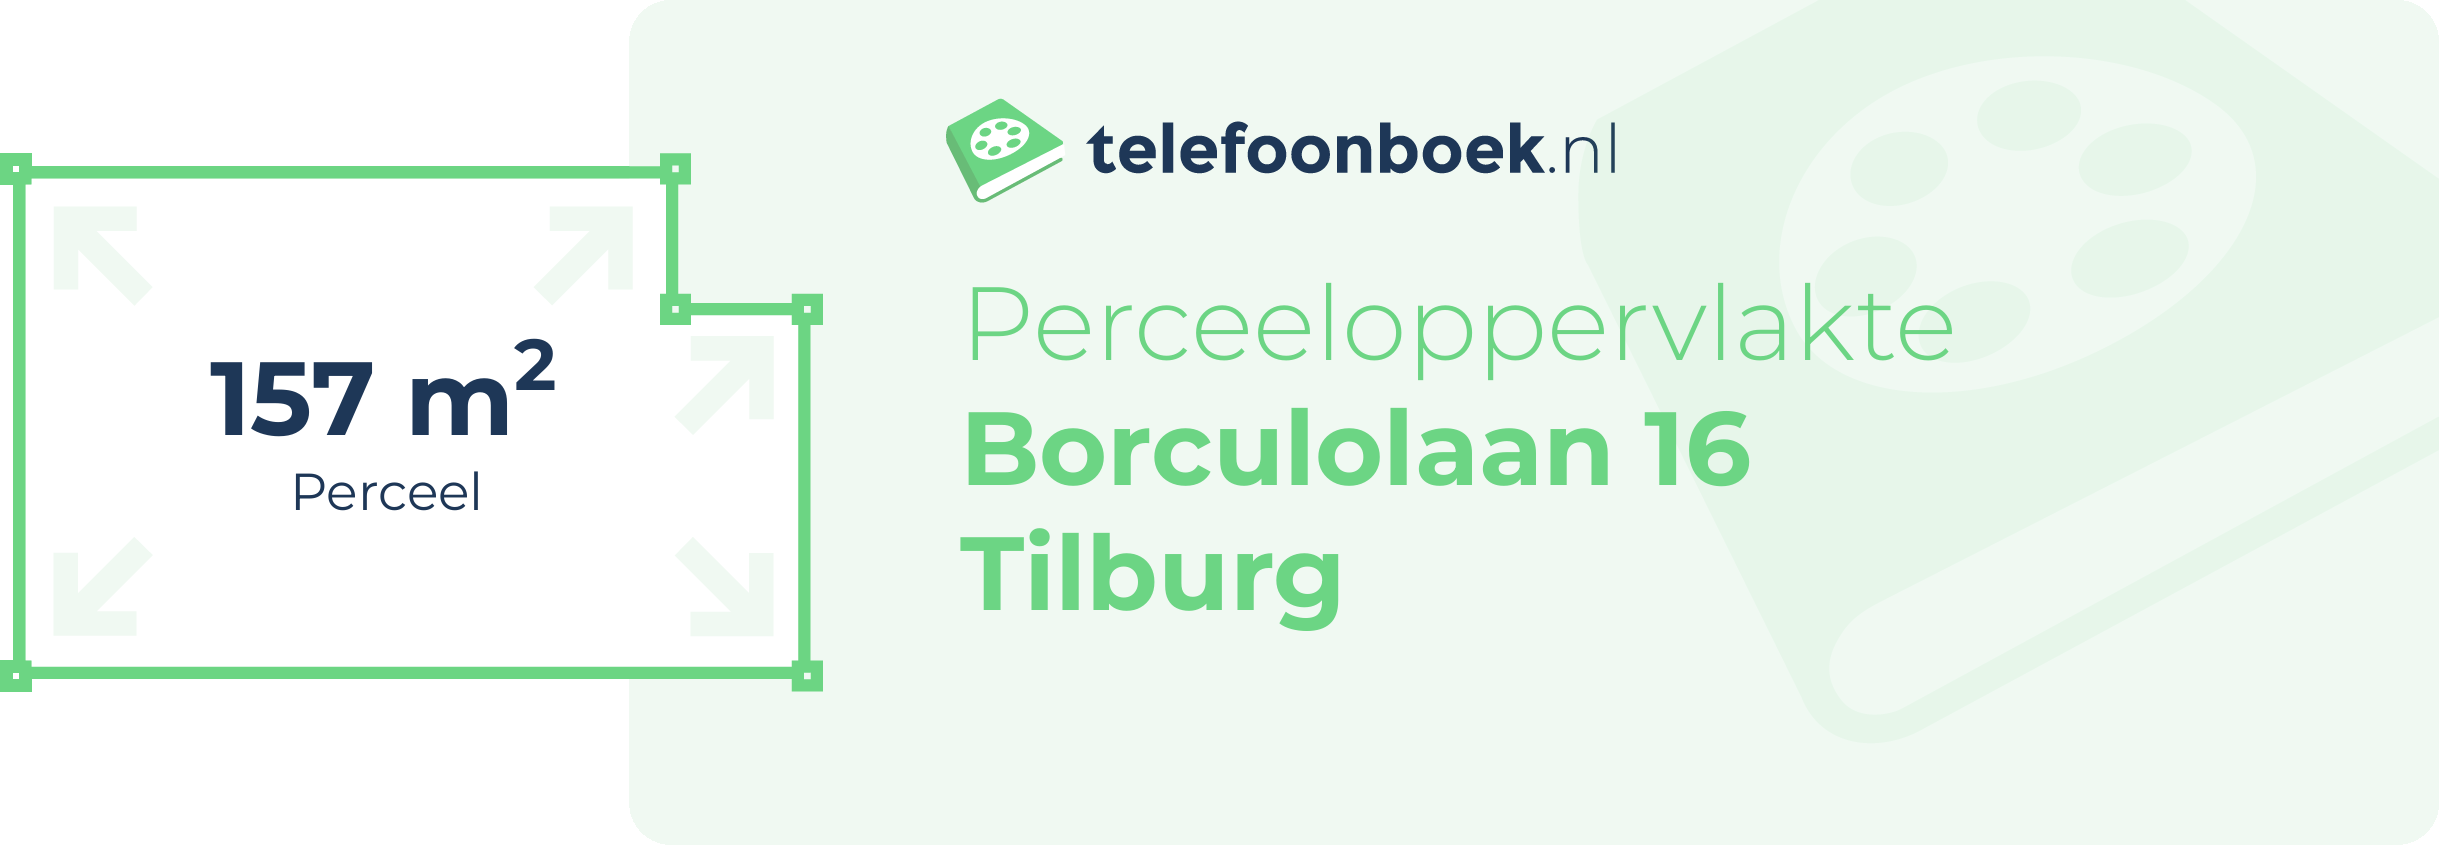 Perceeloppervlakte Borculolaan 16 Tilburg